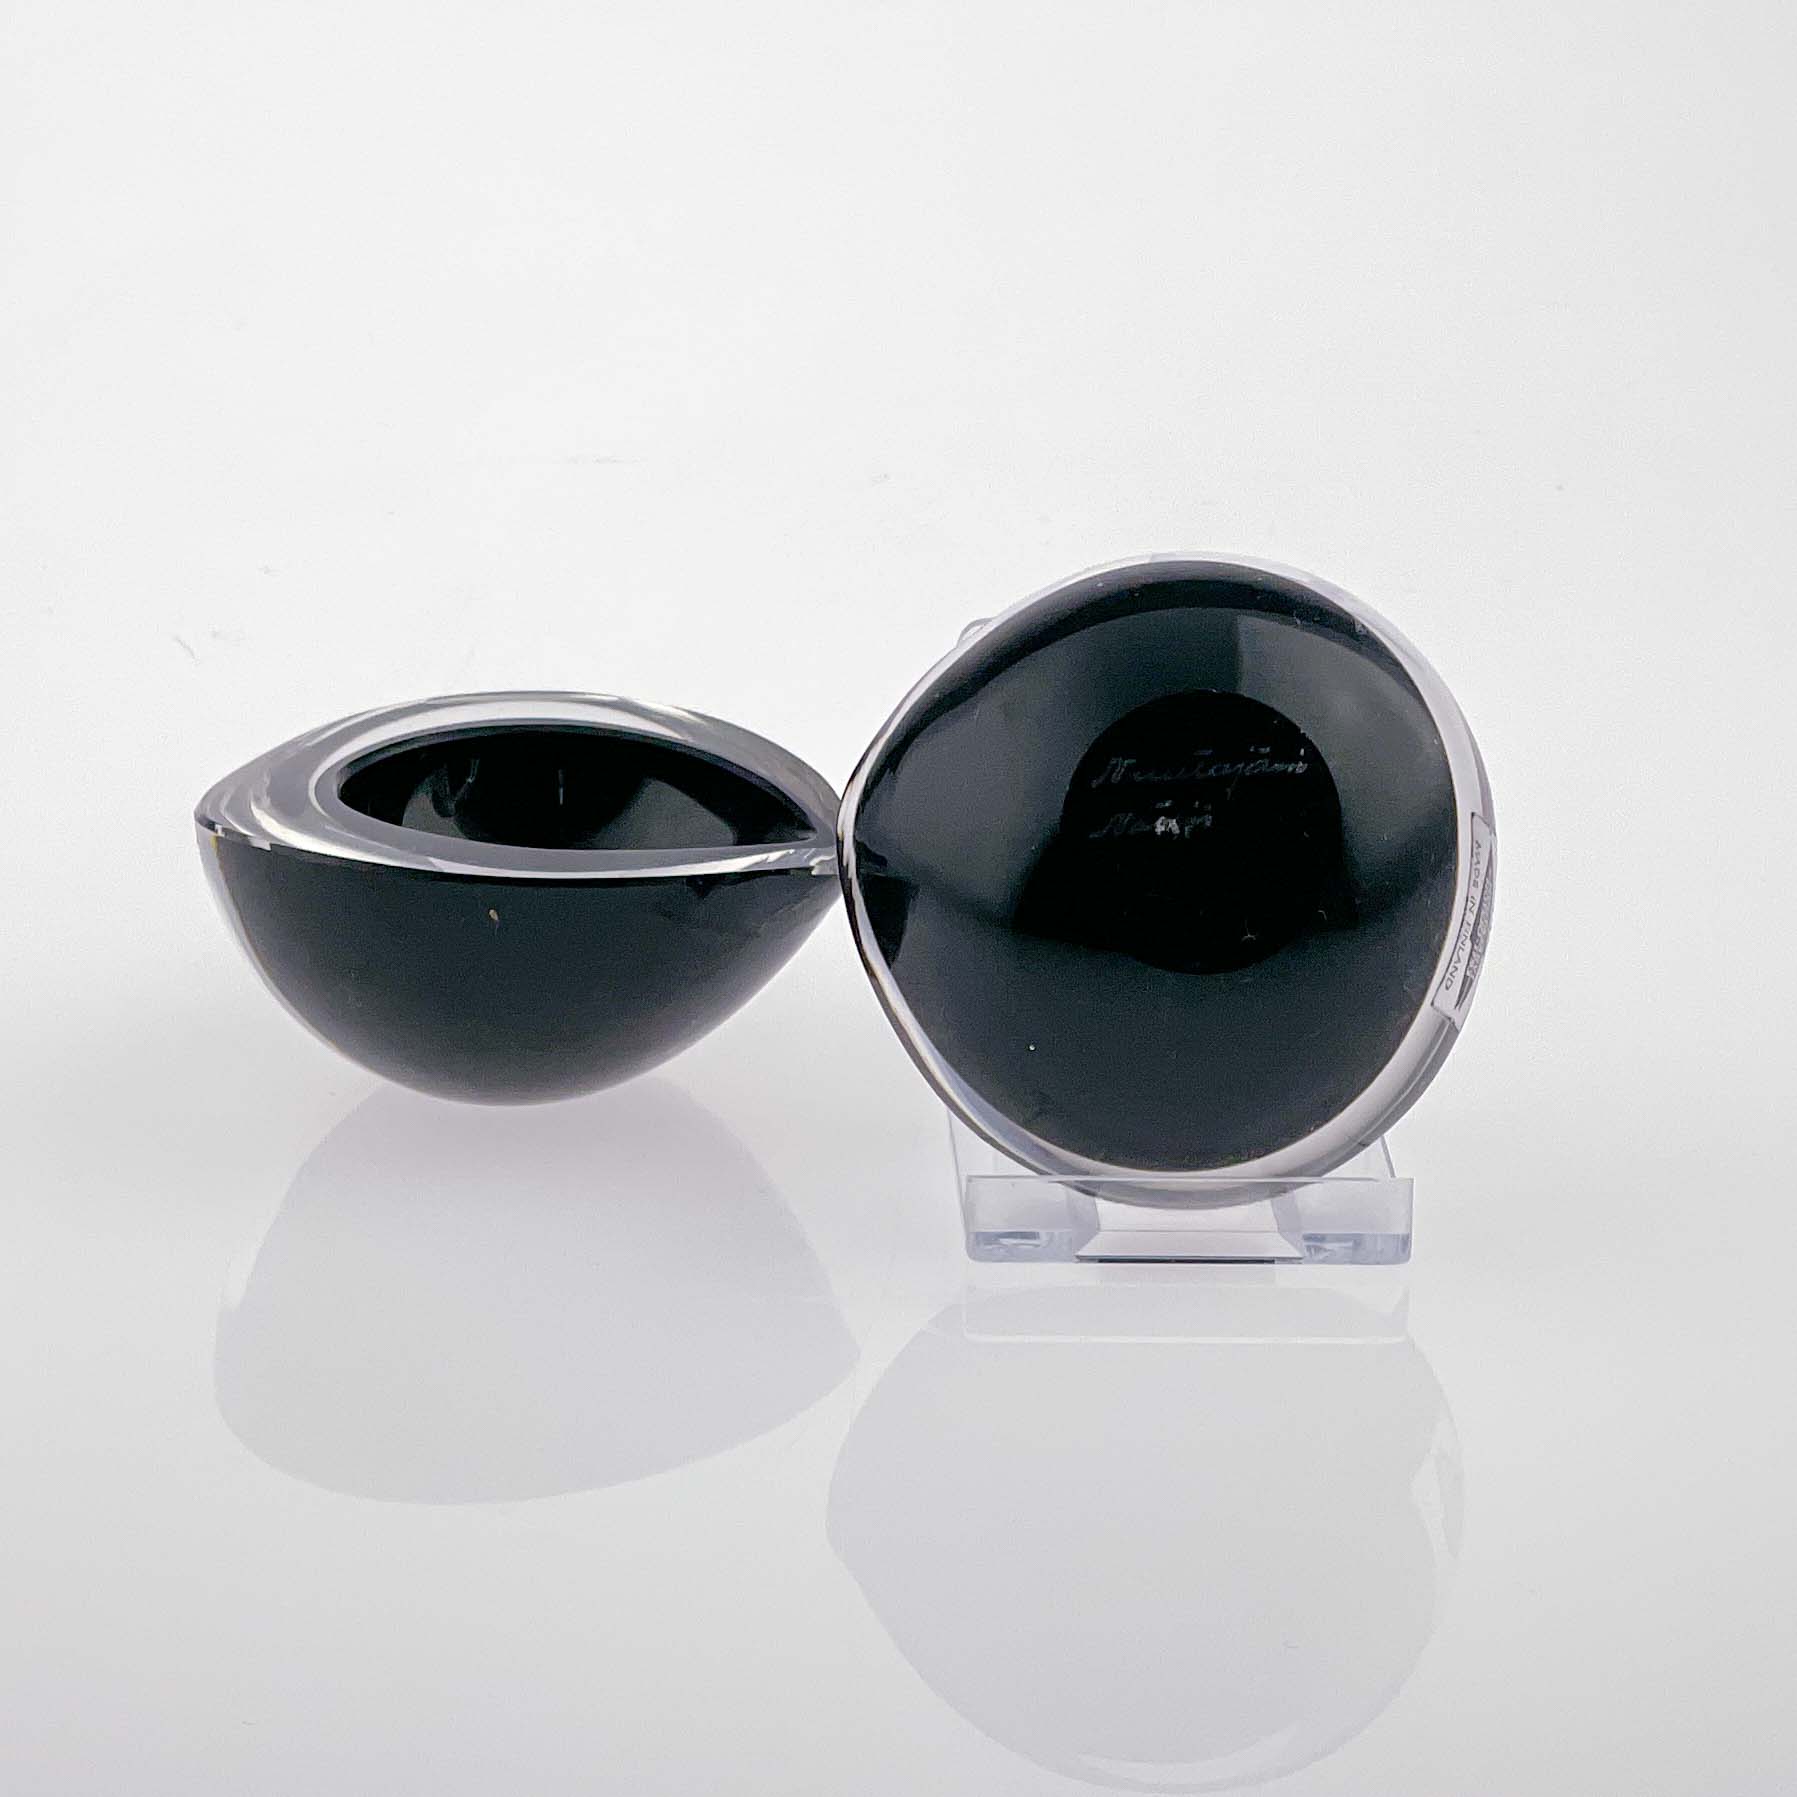 Kaj Franck - Two clear and black glass art-objects "Kastanja" (Chestnut), model KF211 - Nuutajärvi-Notsjö Finland circa 1965